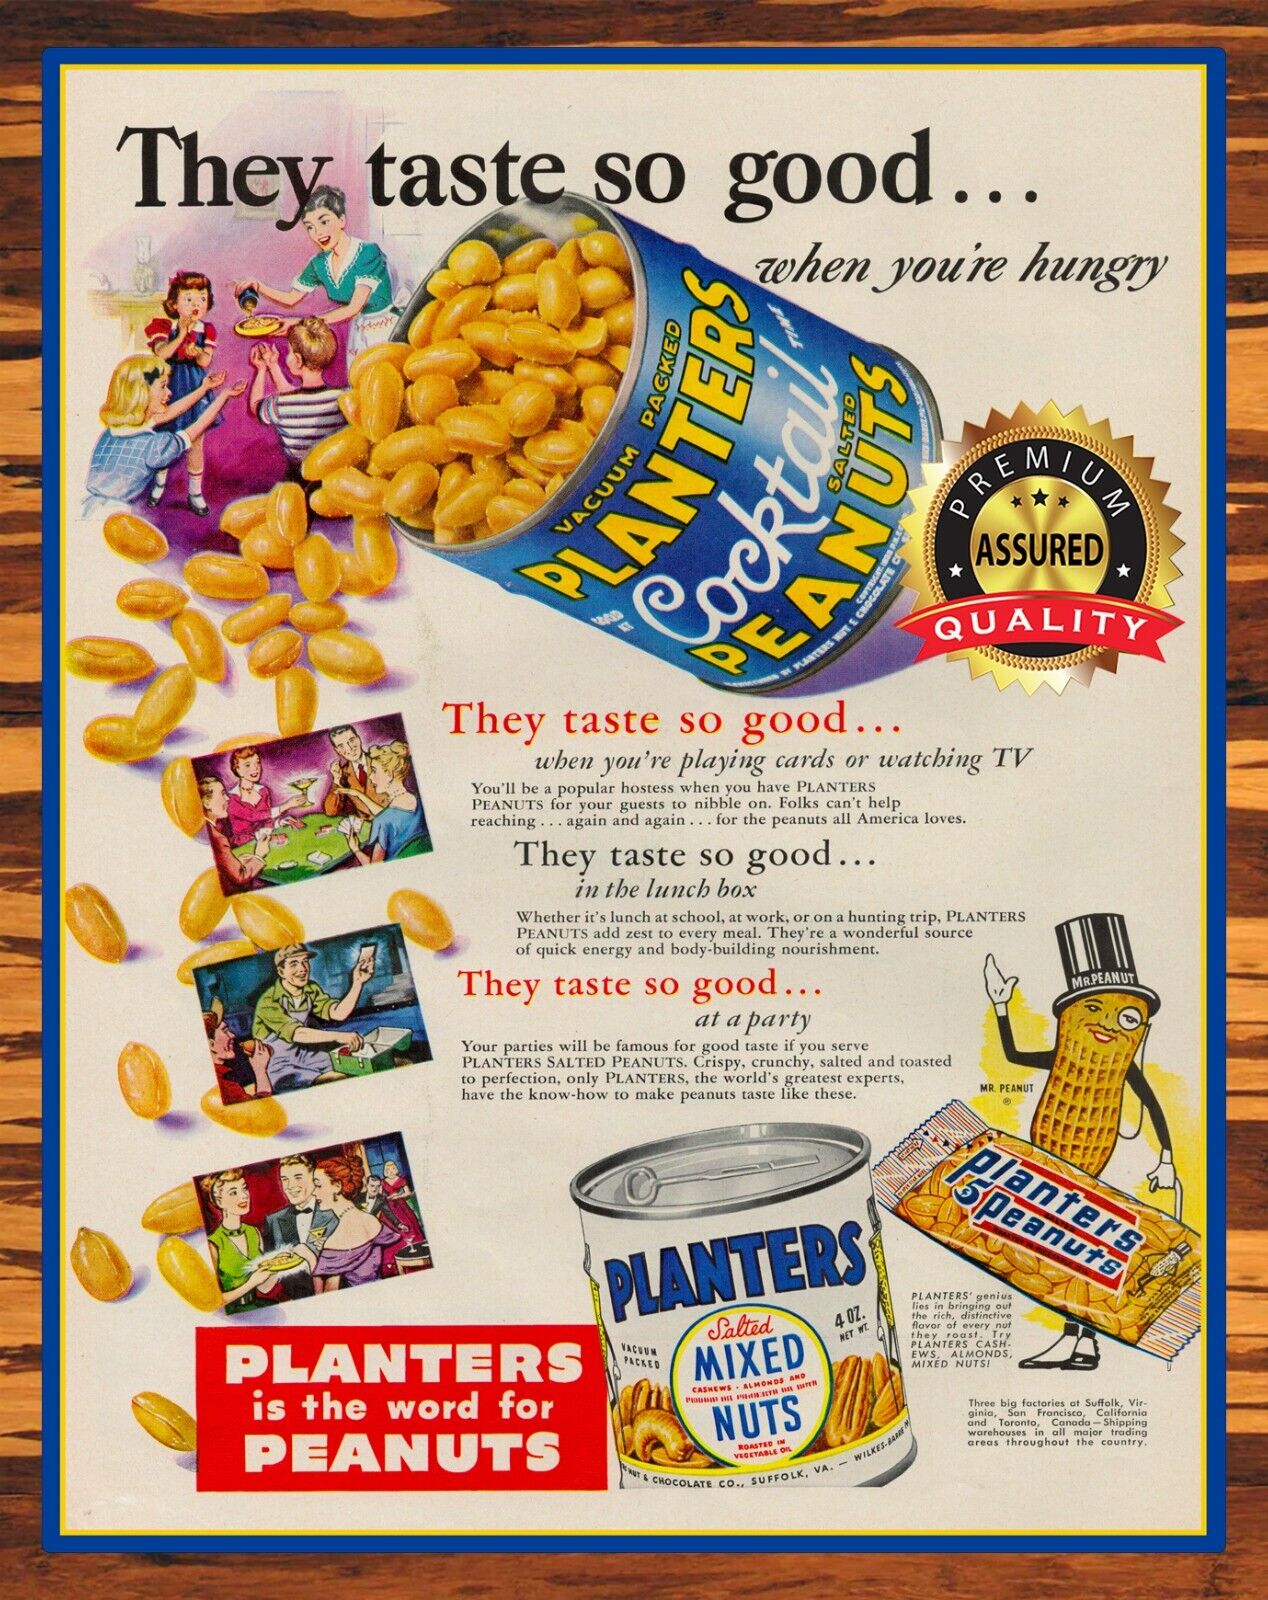 Planters Peanuts - They Taste So Good - 1950 - Metal Sign 11 x 14